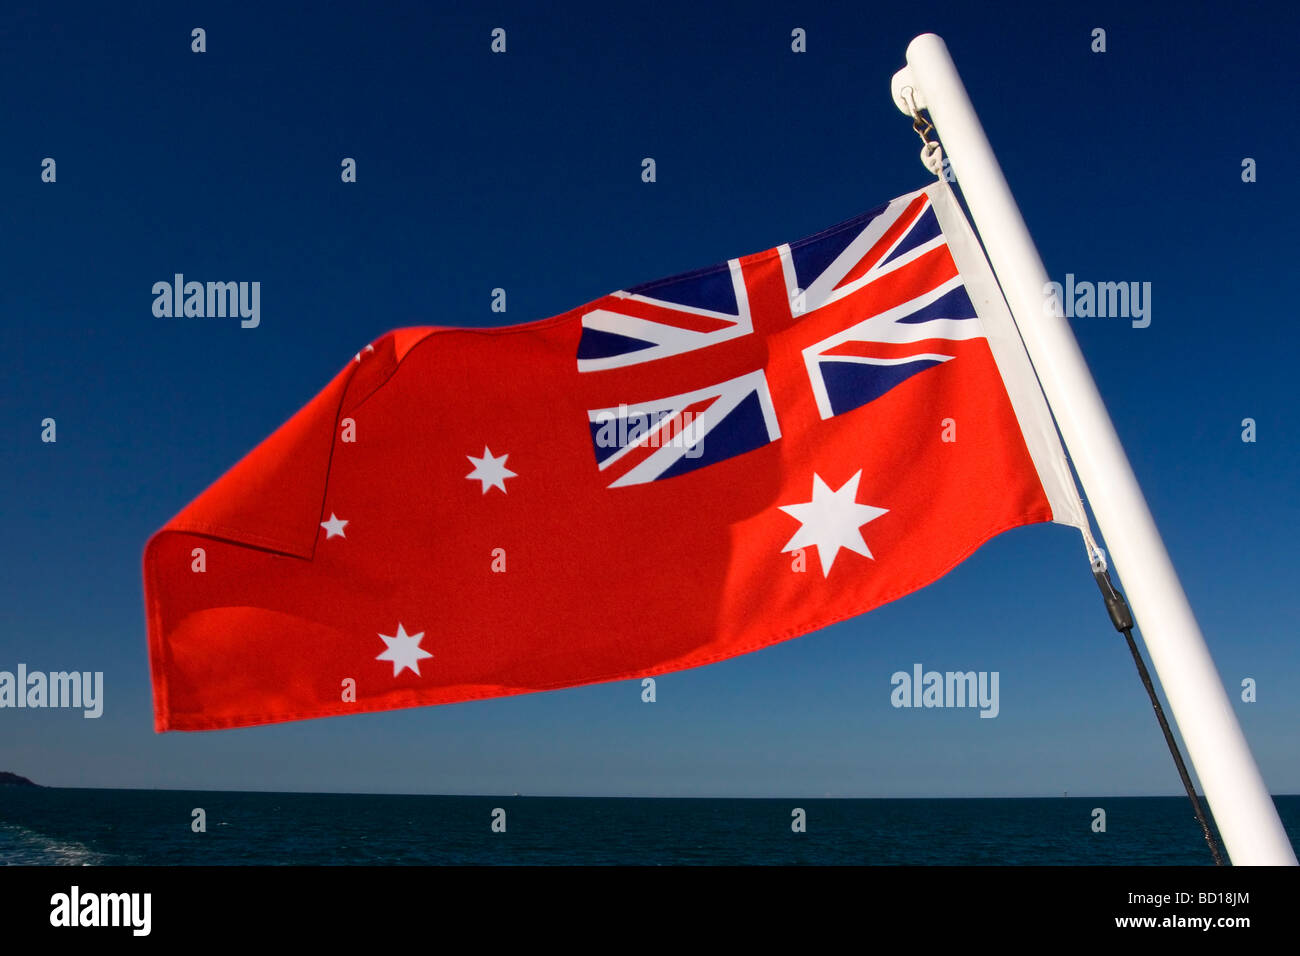 Australian Red Ensign flag Stock Photo - Alamy